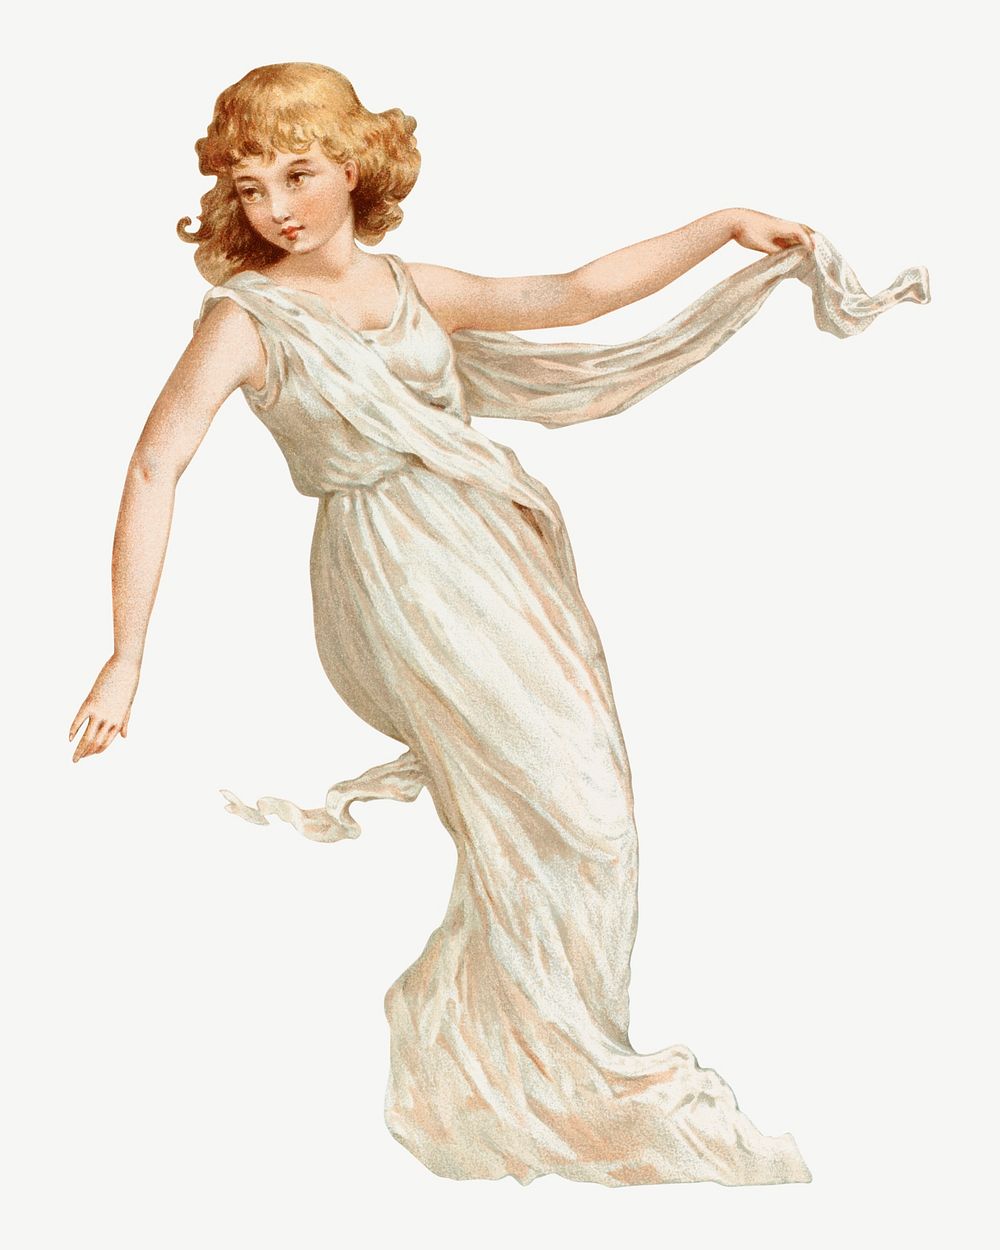 Greek Goddess, vintage woman illustration psd. Remixed by rawpixel.